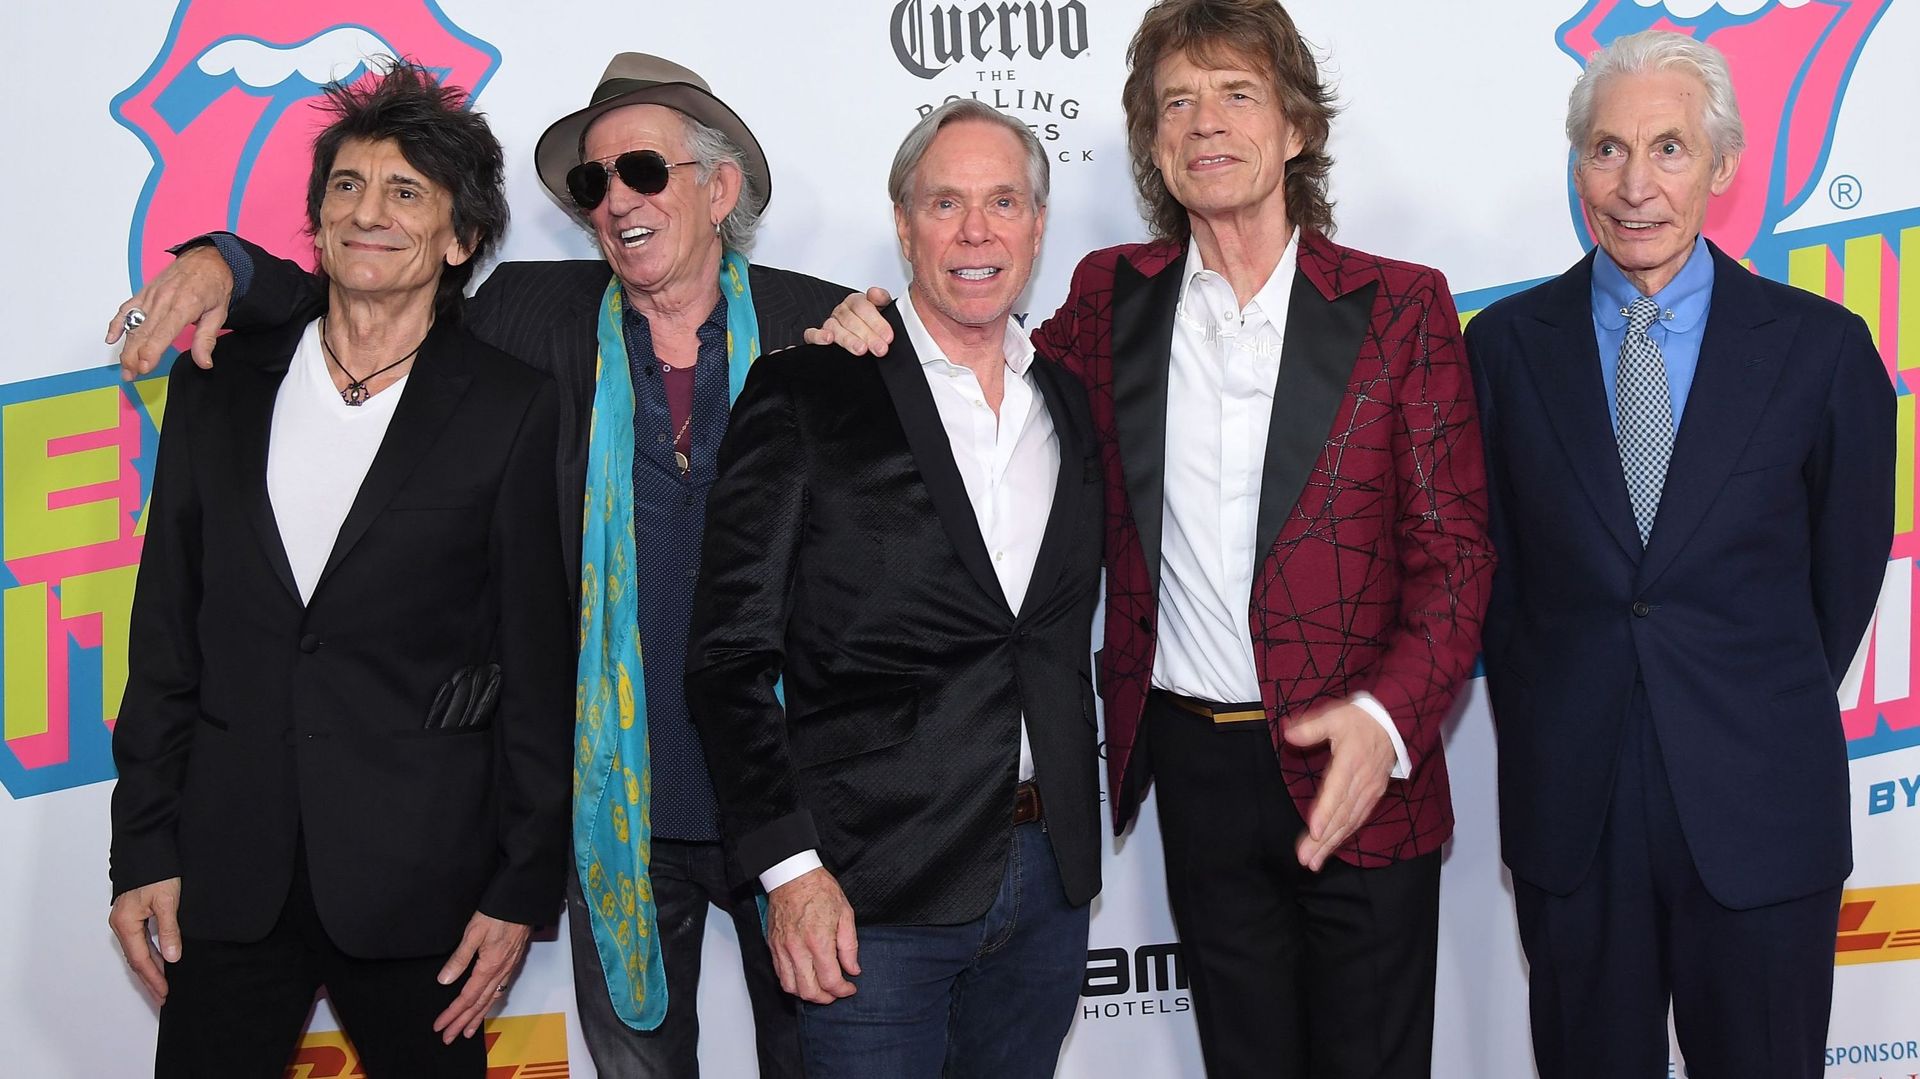 Les "Rolling Stones"